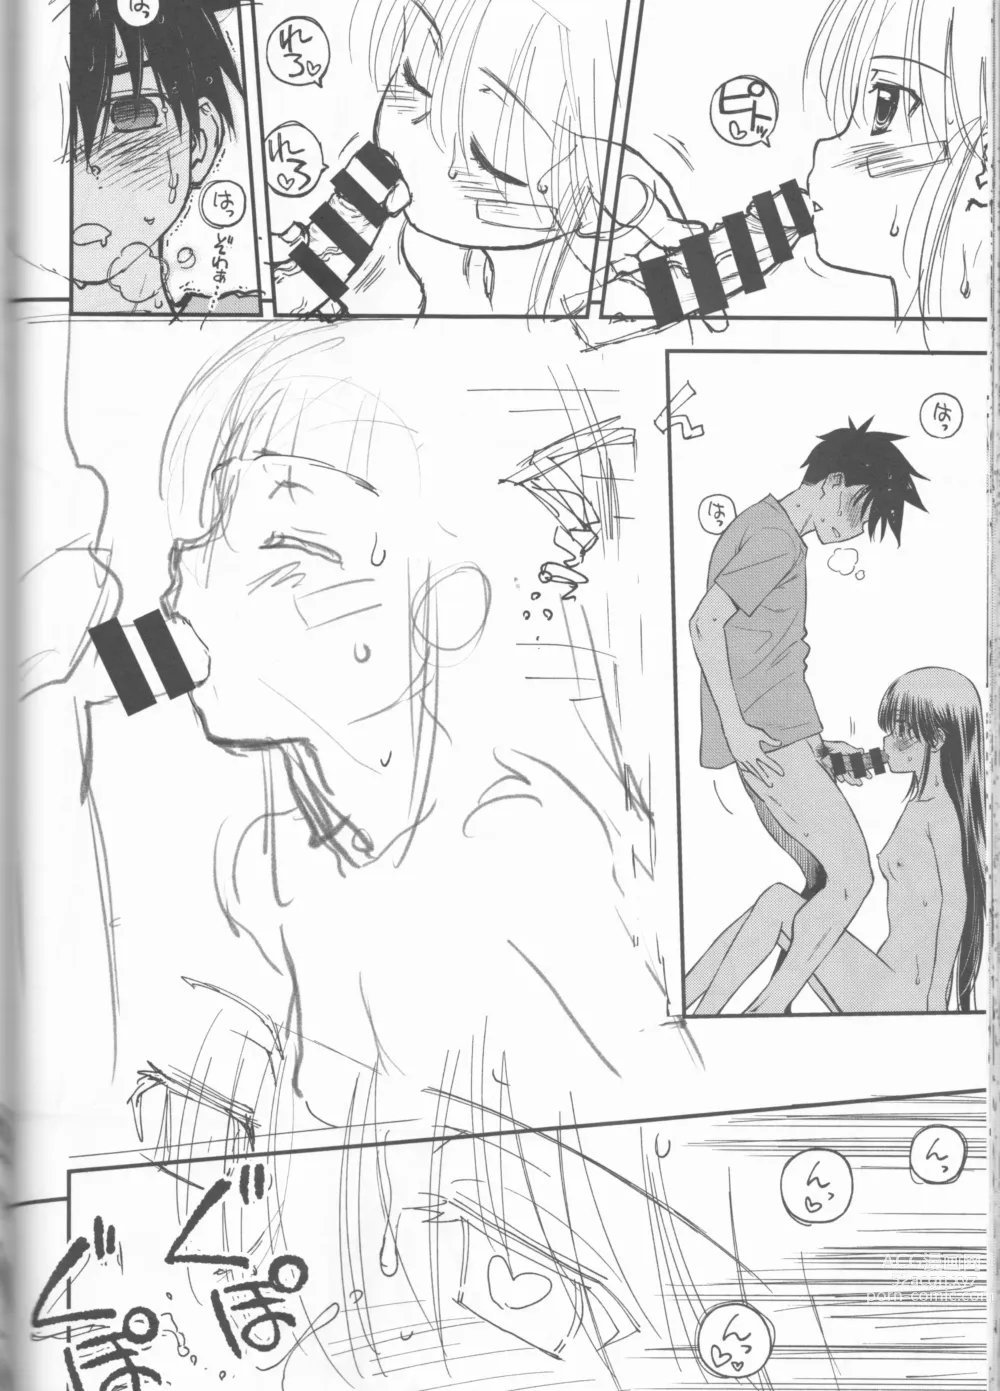 Page 63 of doujinshi kxs.